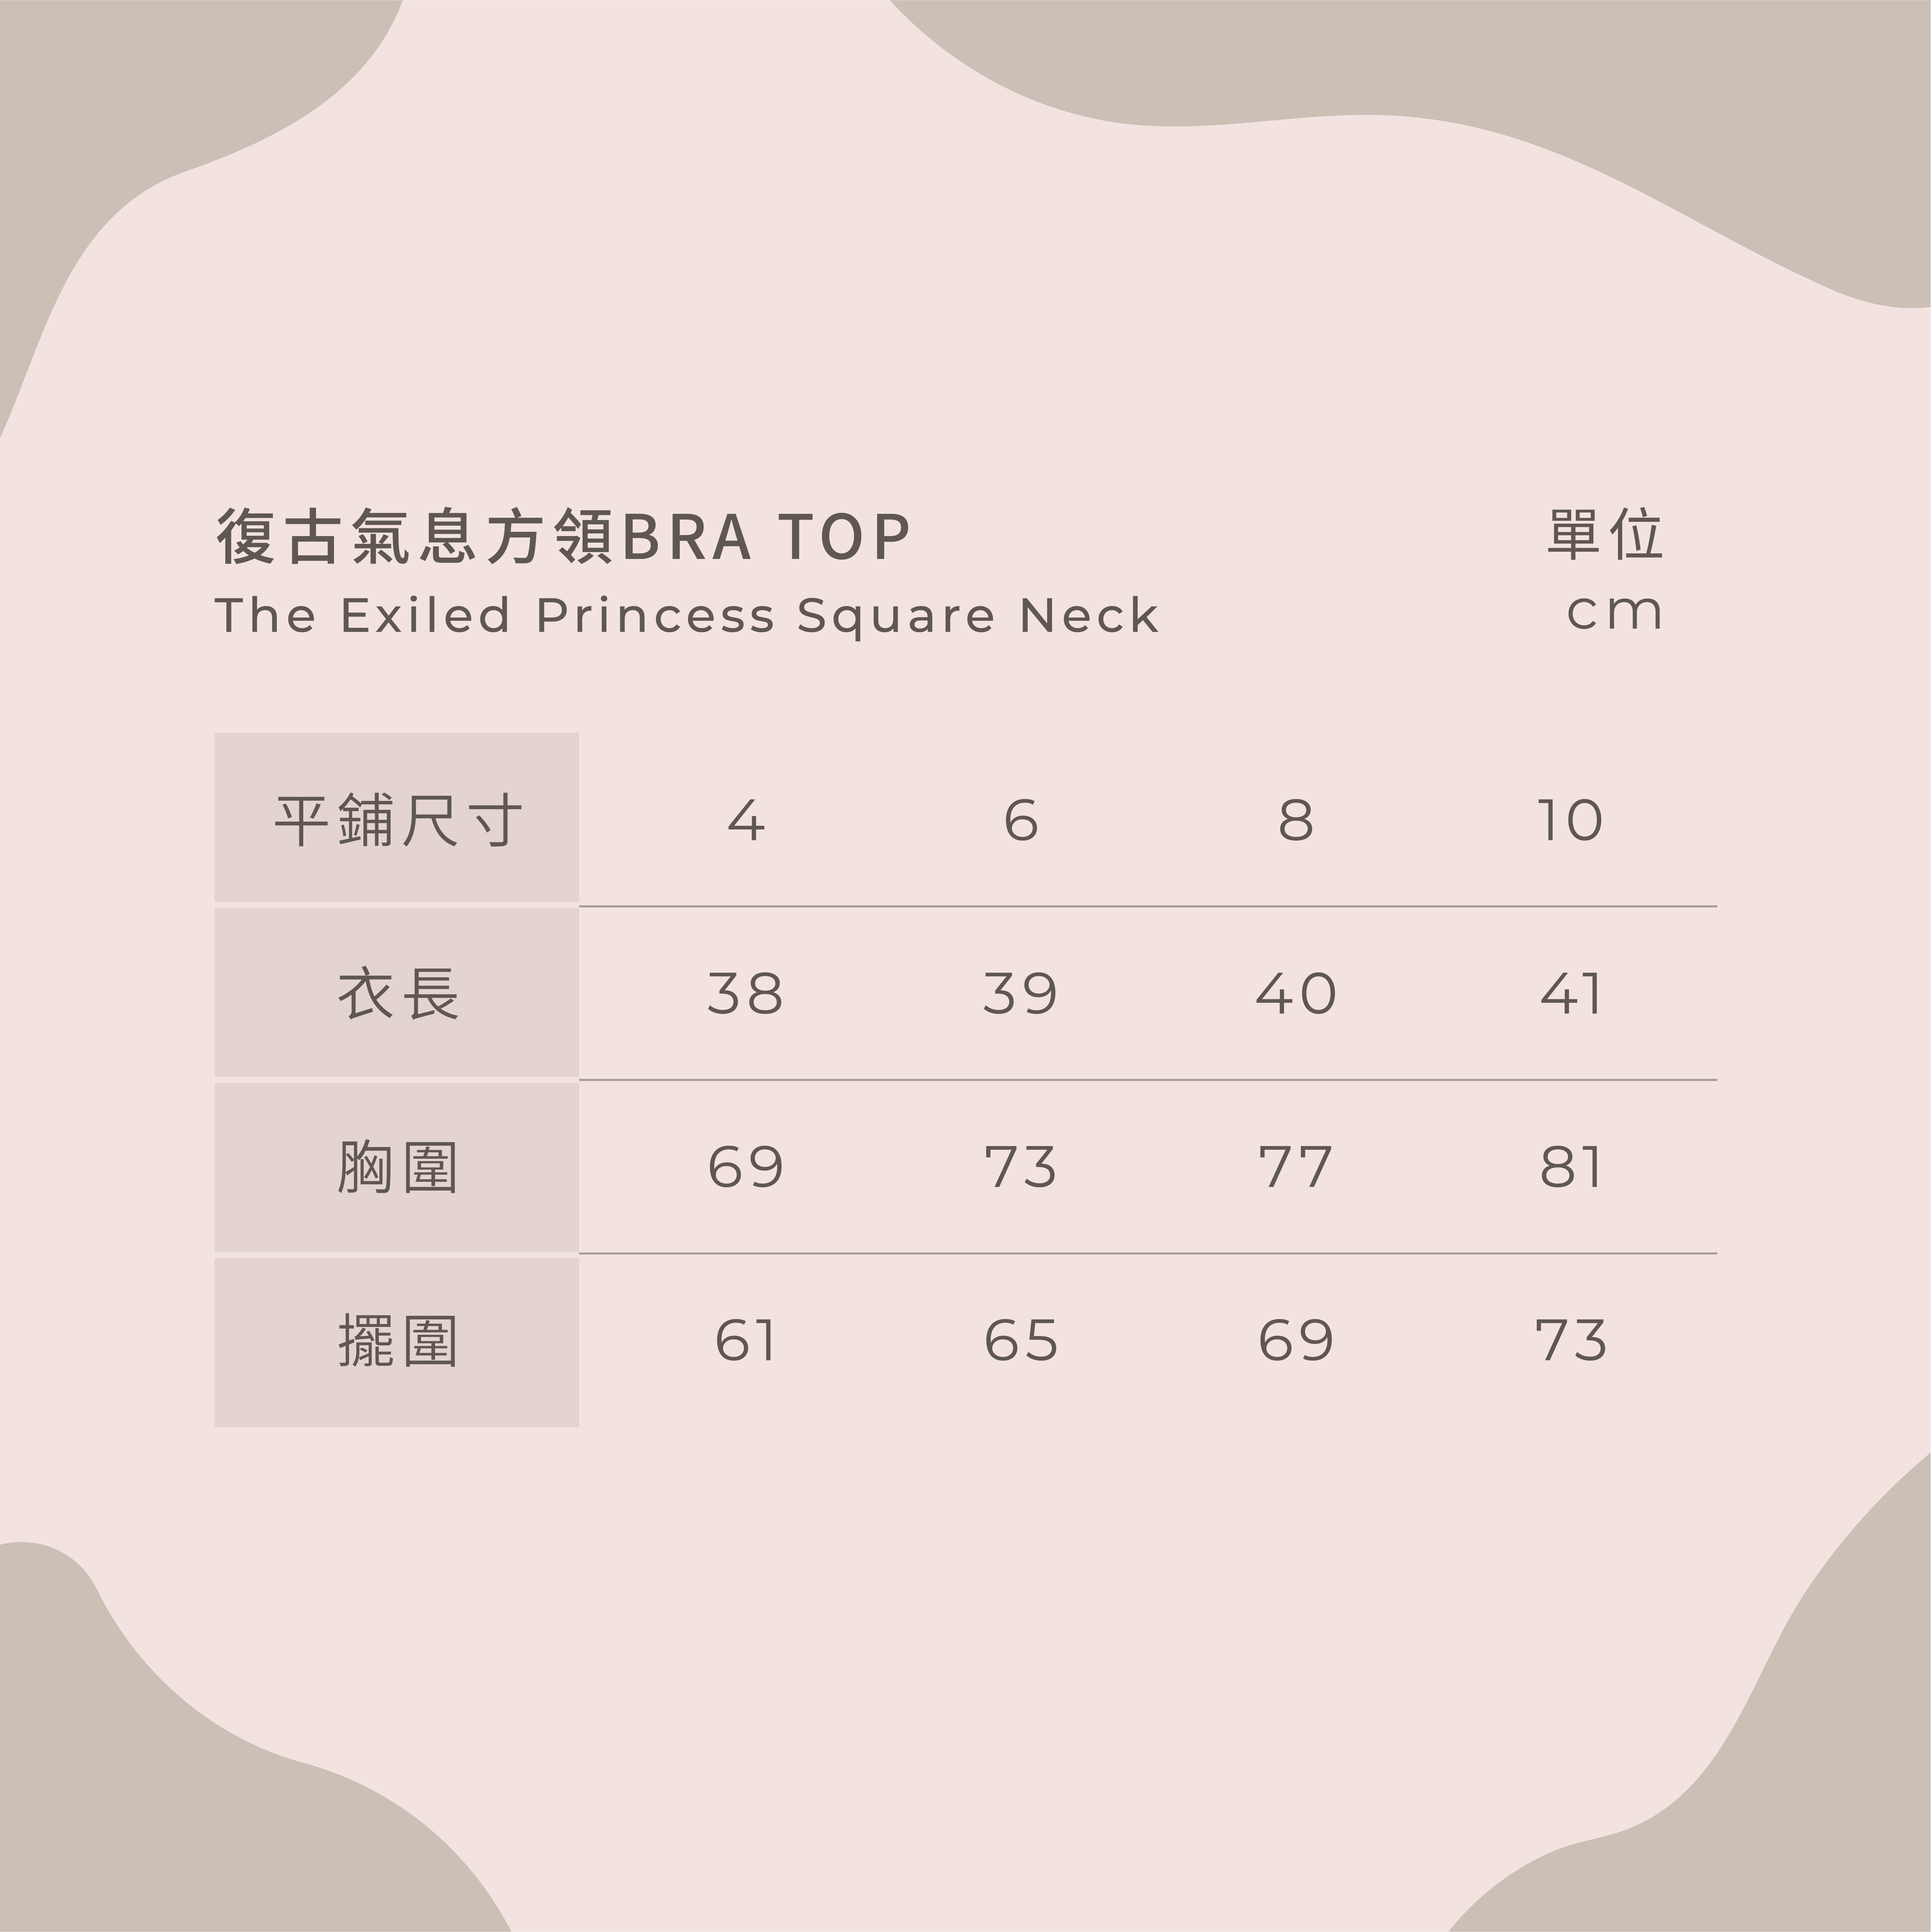 21AW_復古氣息方領BRA TOP The Exiled Princess Square Neck__工作區域 1 複本 9.jpg